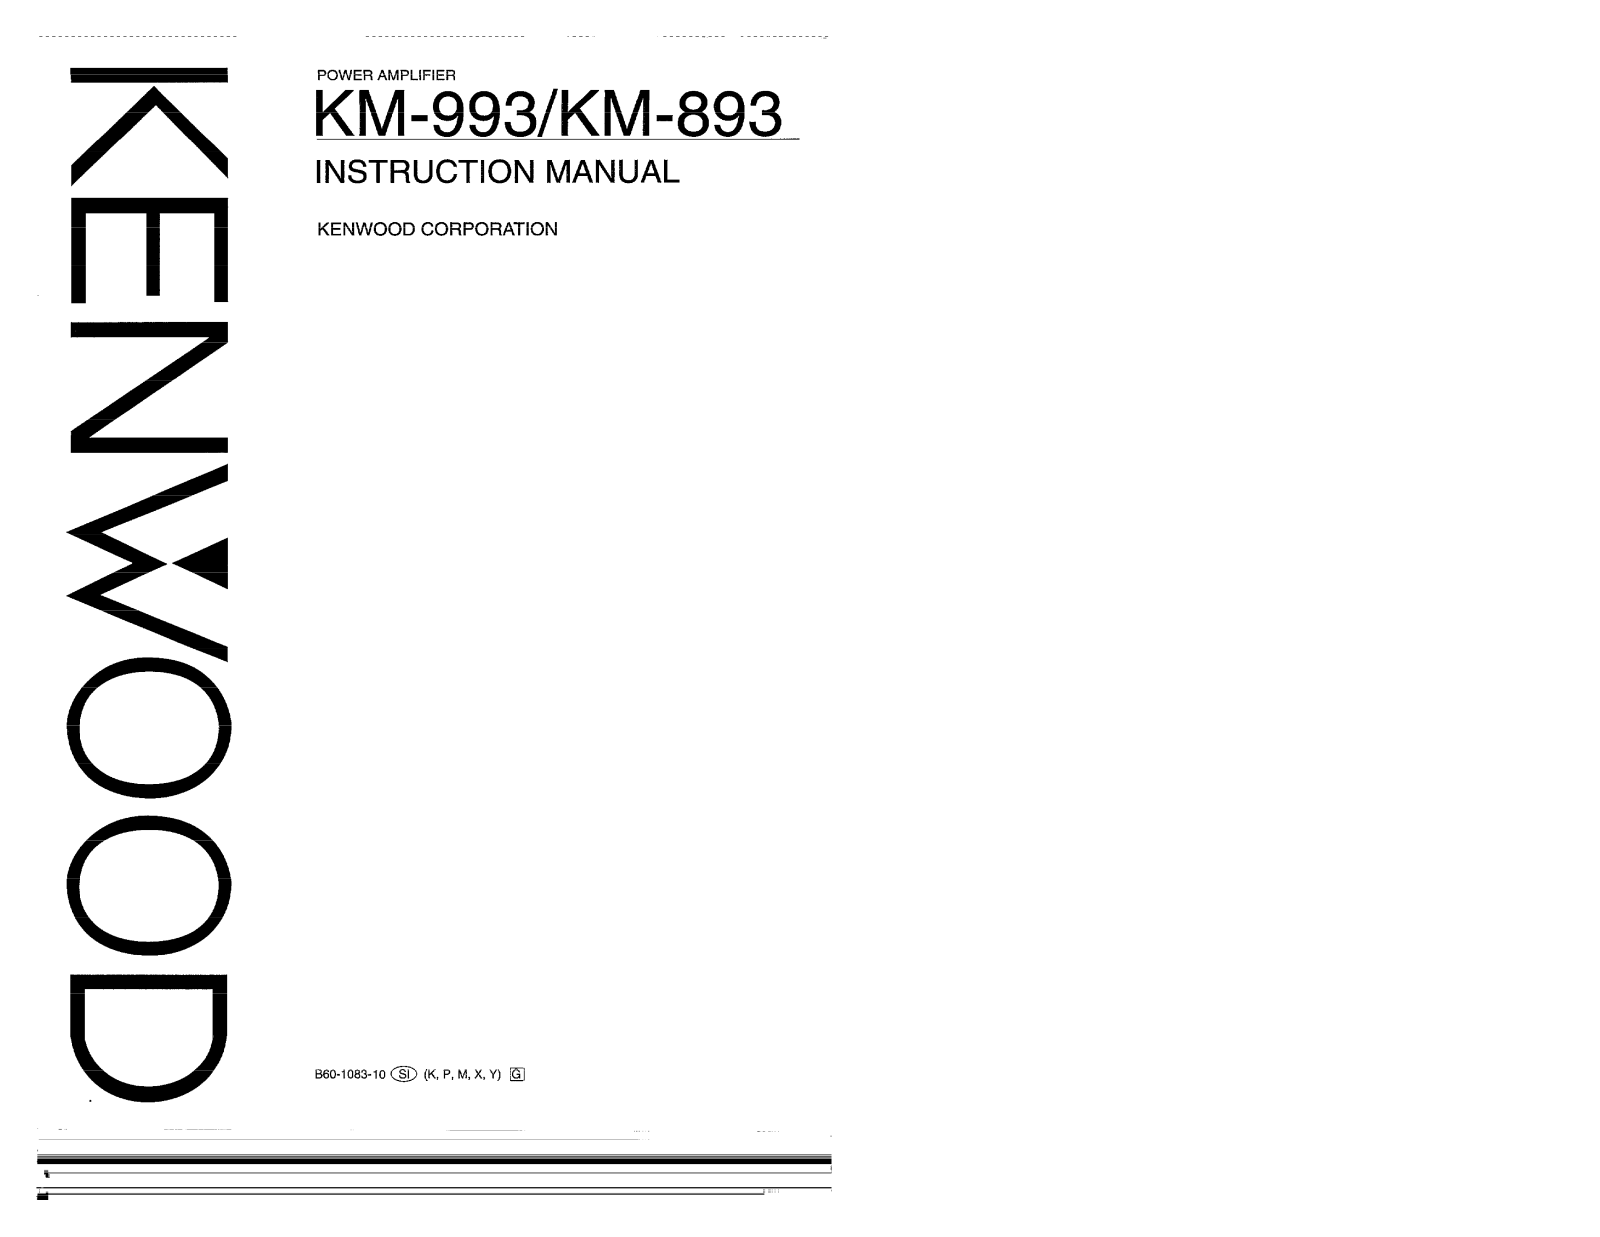 Kenwood KM-893, KM-993 Owner's Manual